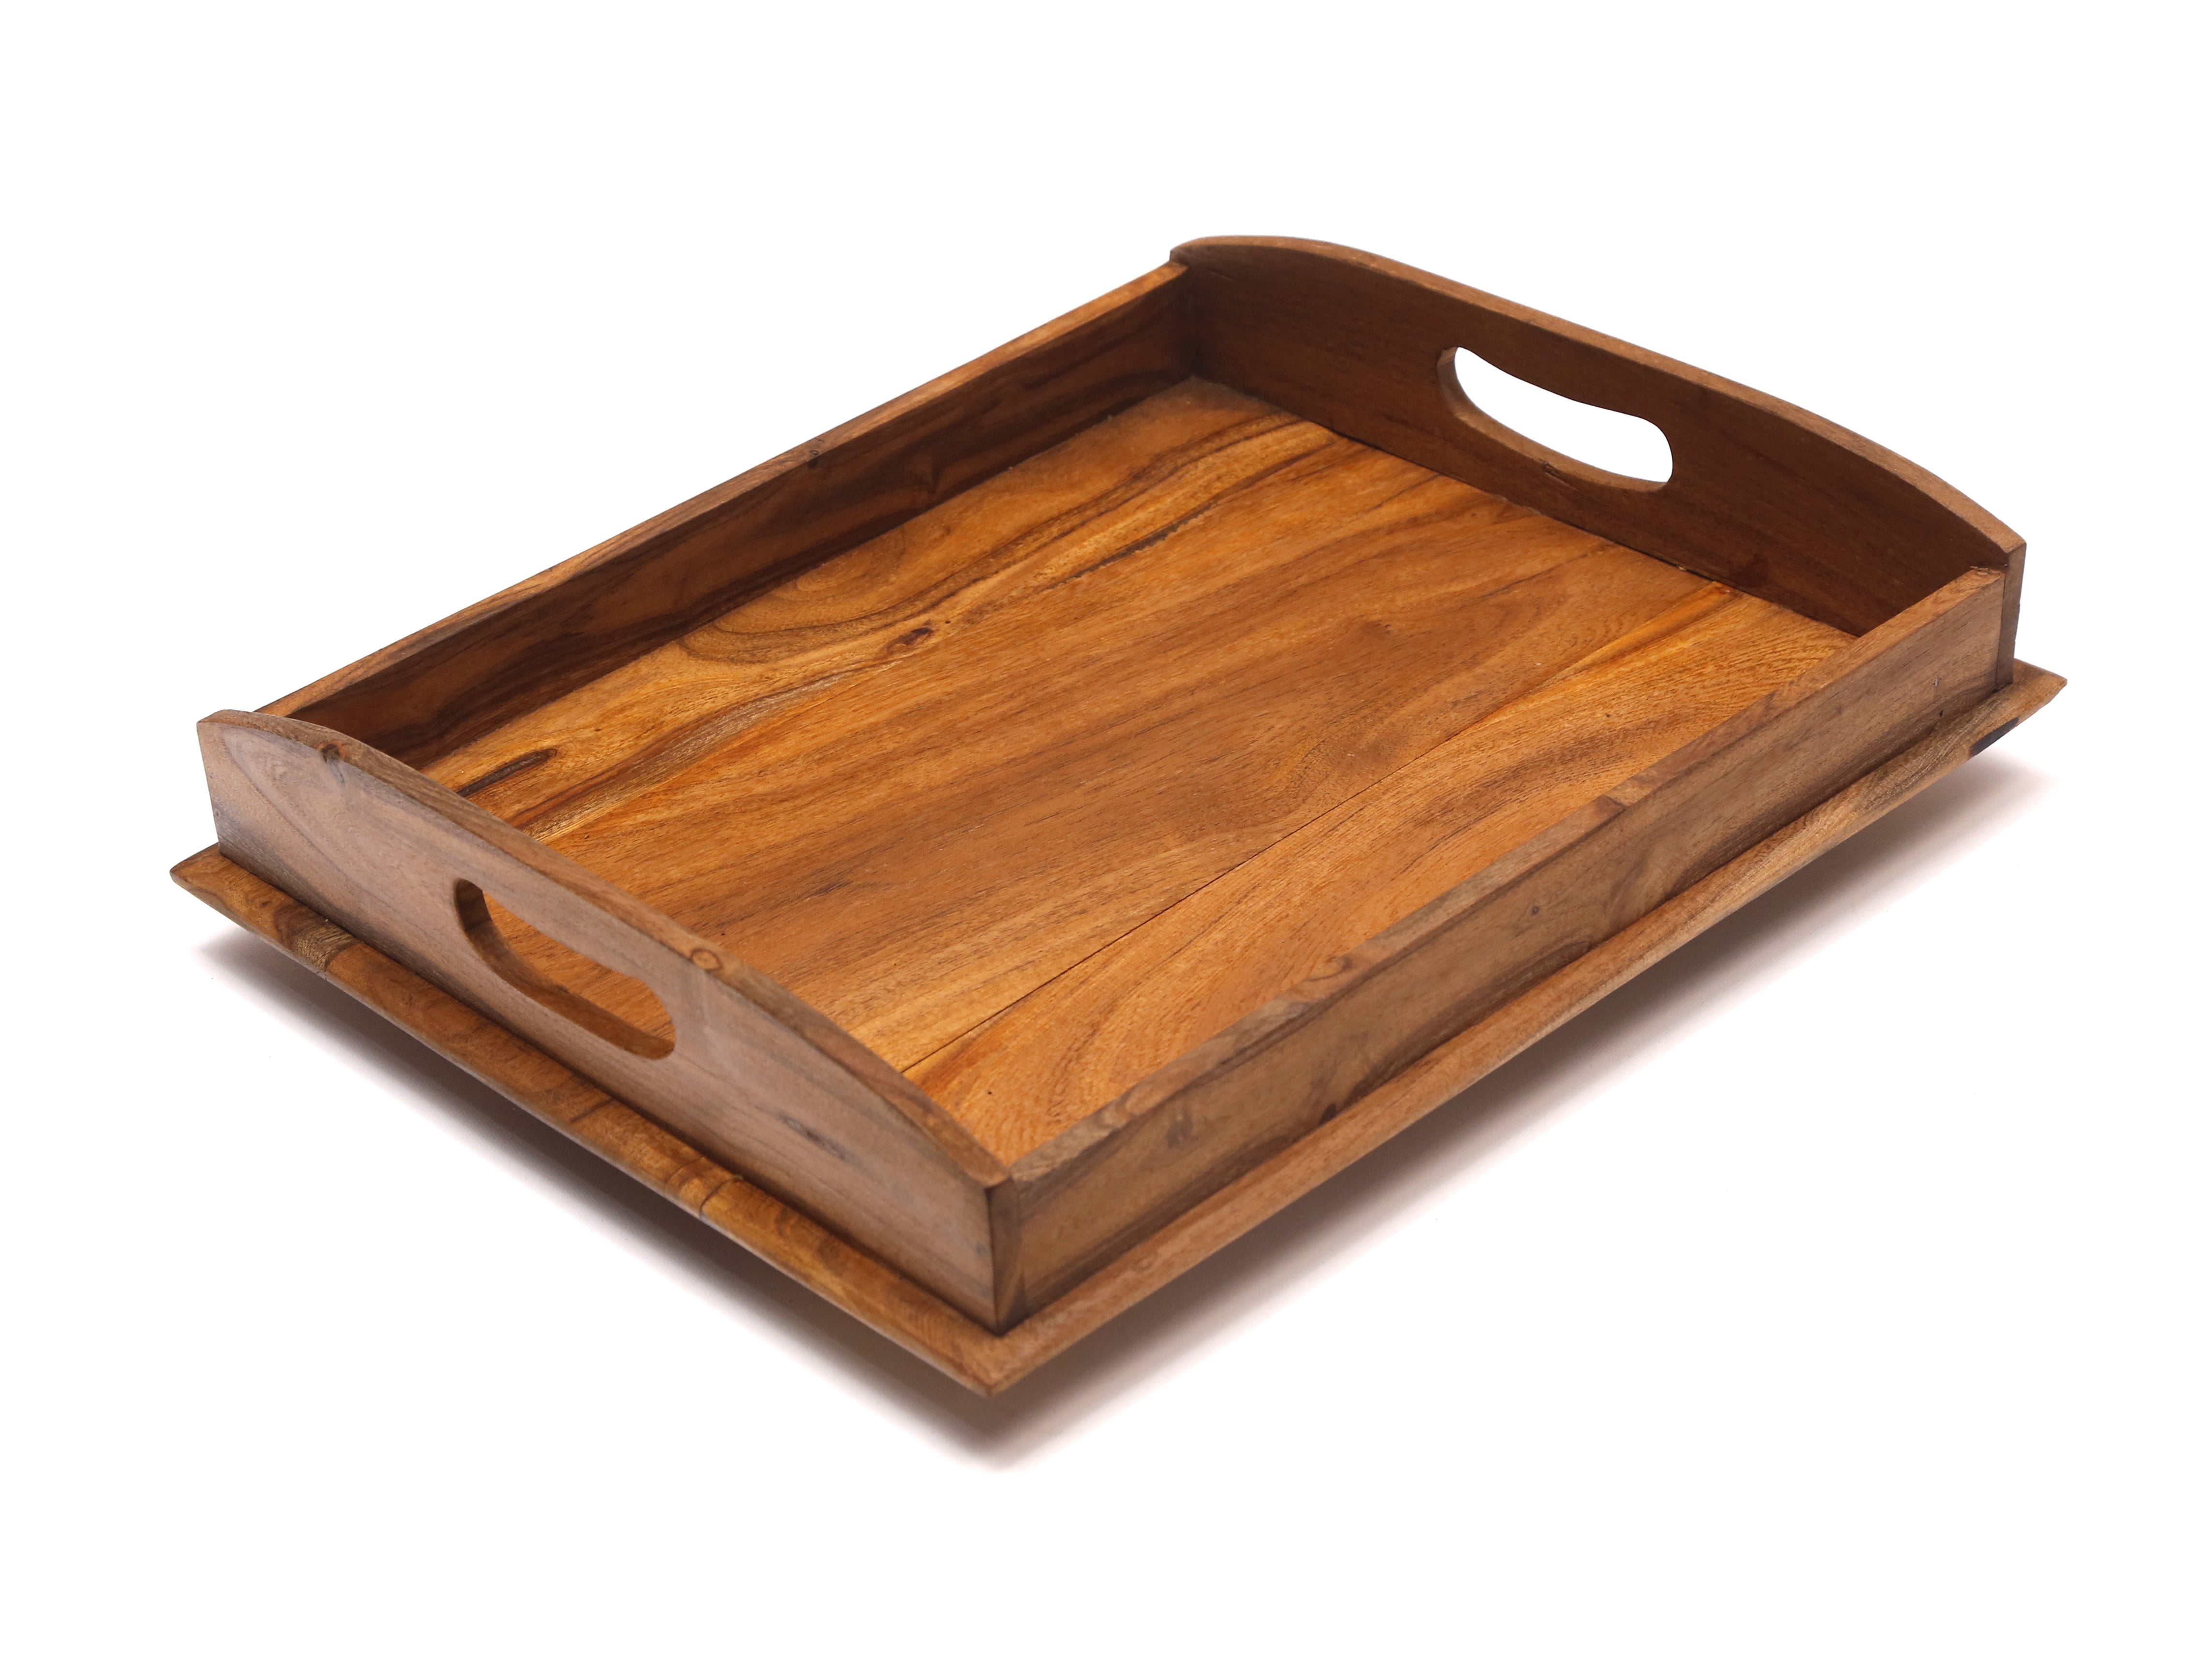 Simple Pleasures Wooden Tray Tray